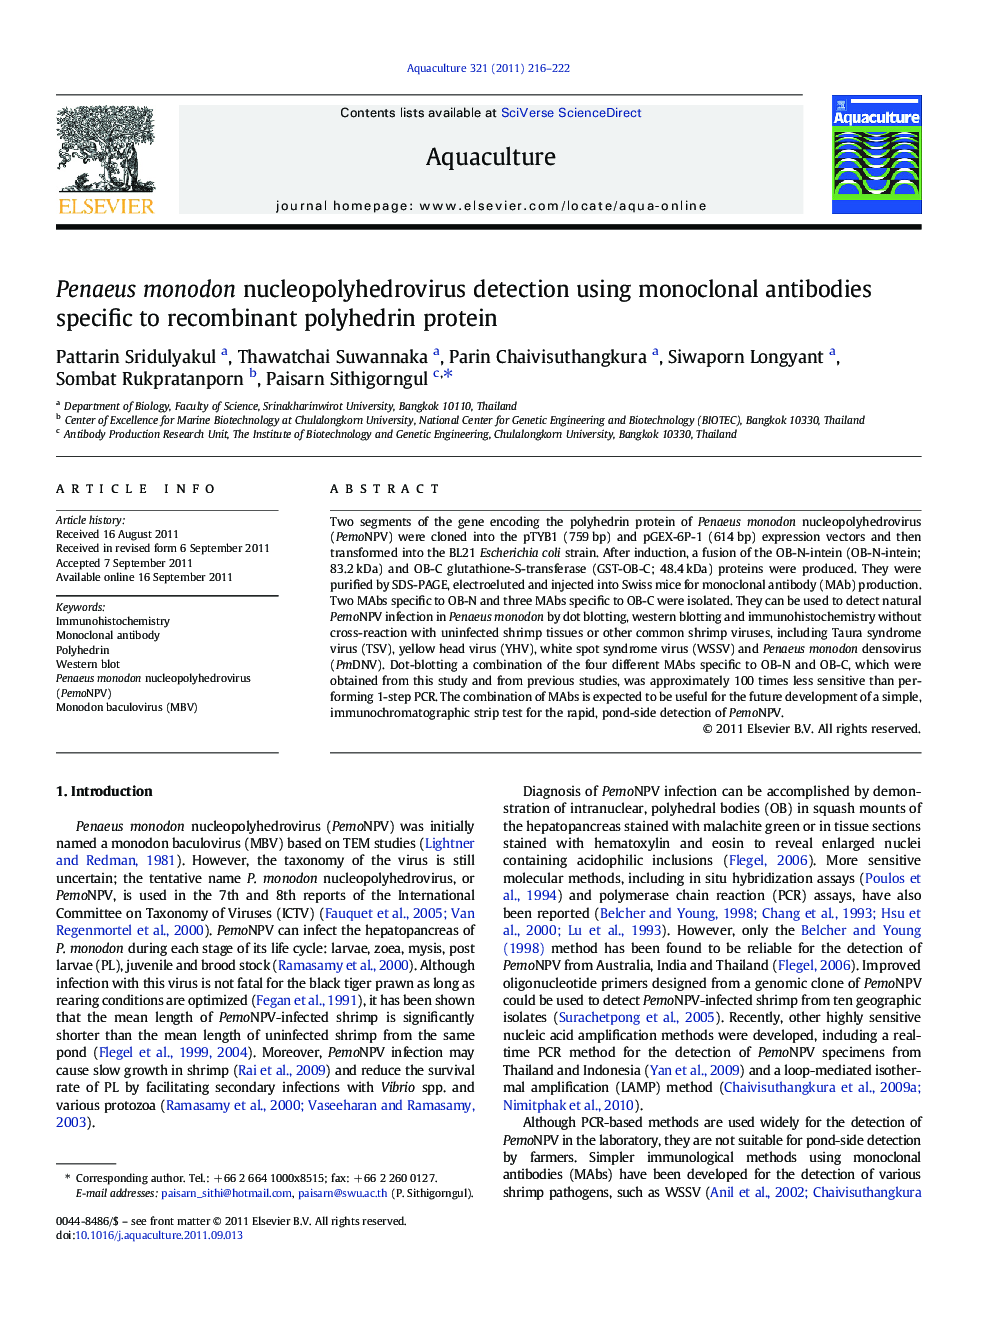 Penaeus monodon nucleopolyhedrovirus detection using monoclonal antibodies specific to recombinant polyhedrin protein